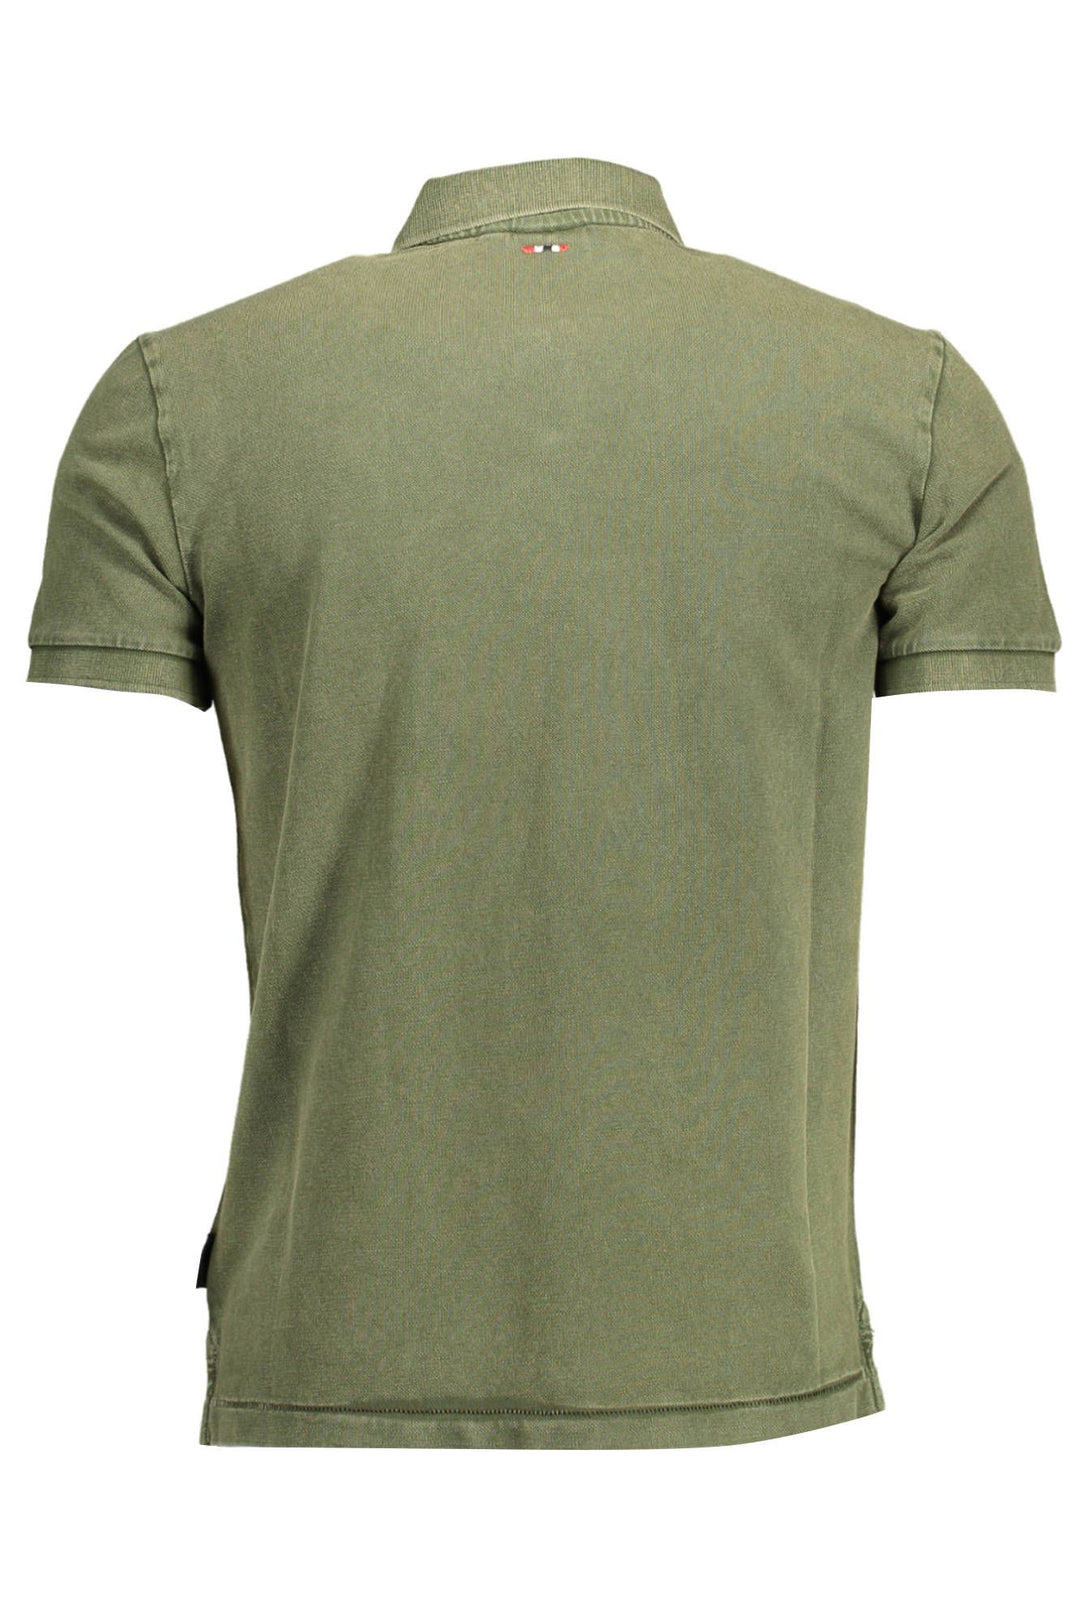 Napapijri Chic Green Cotton Polo Shirt